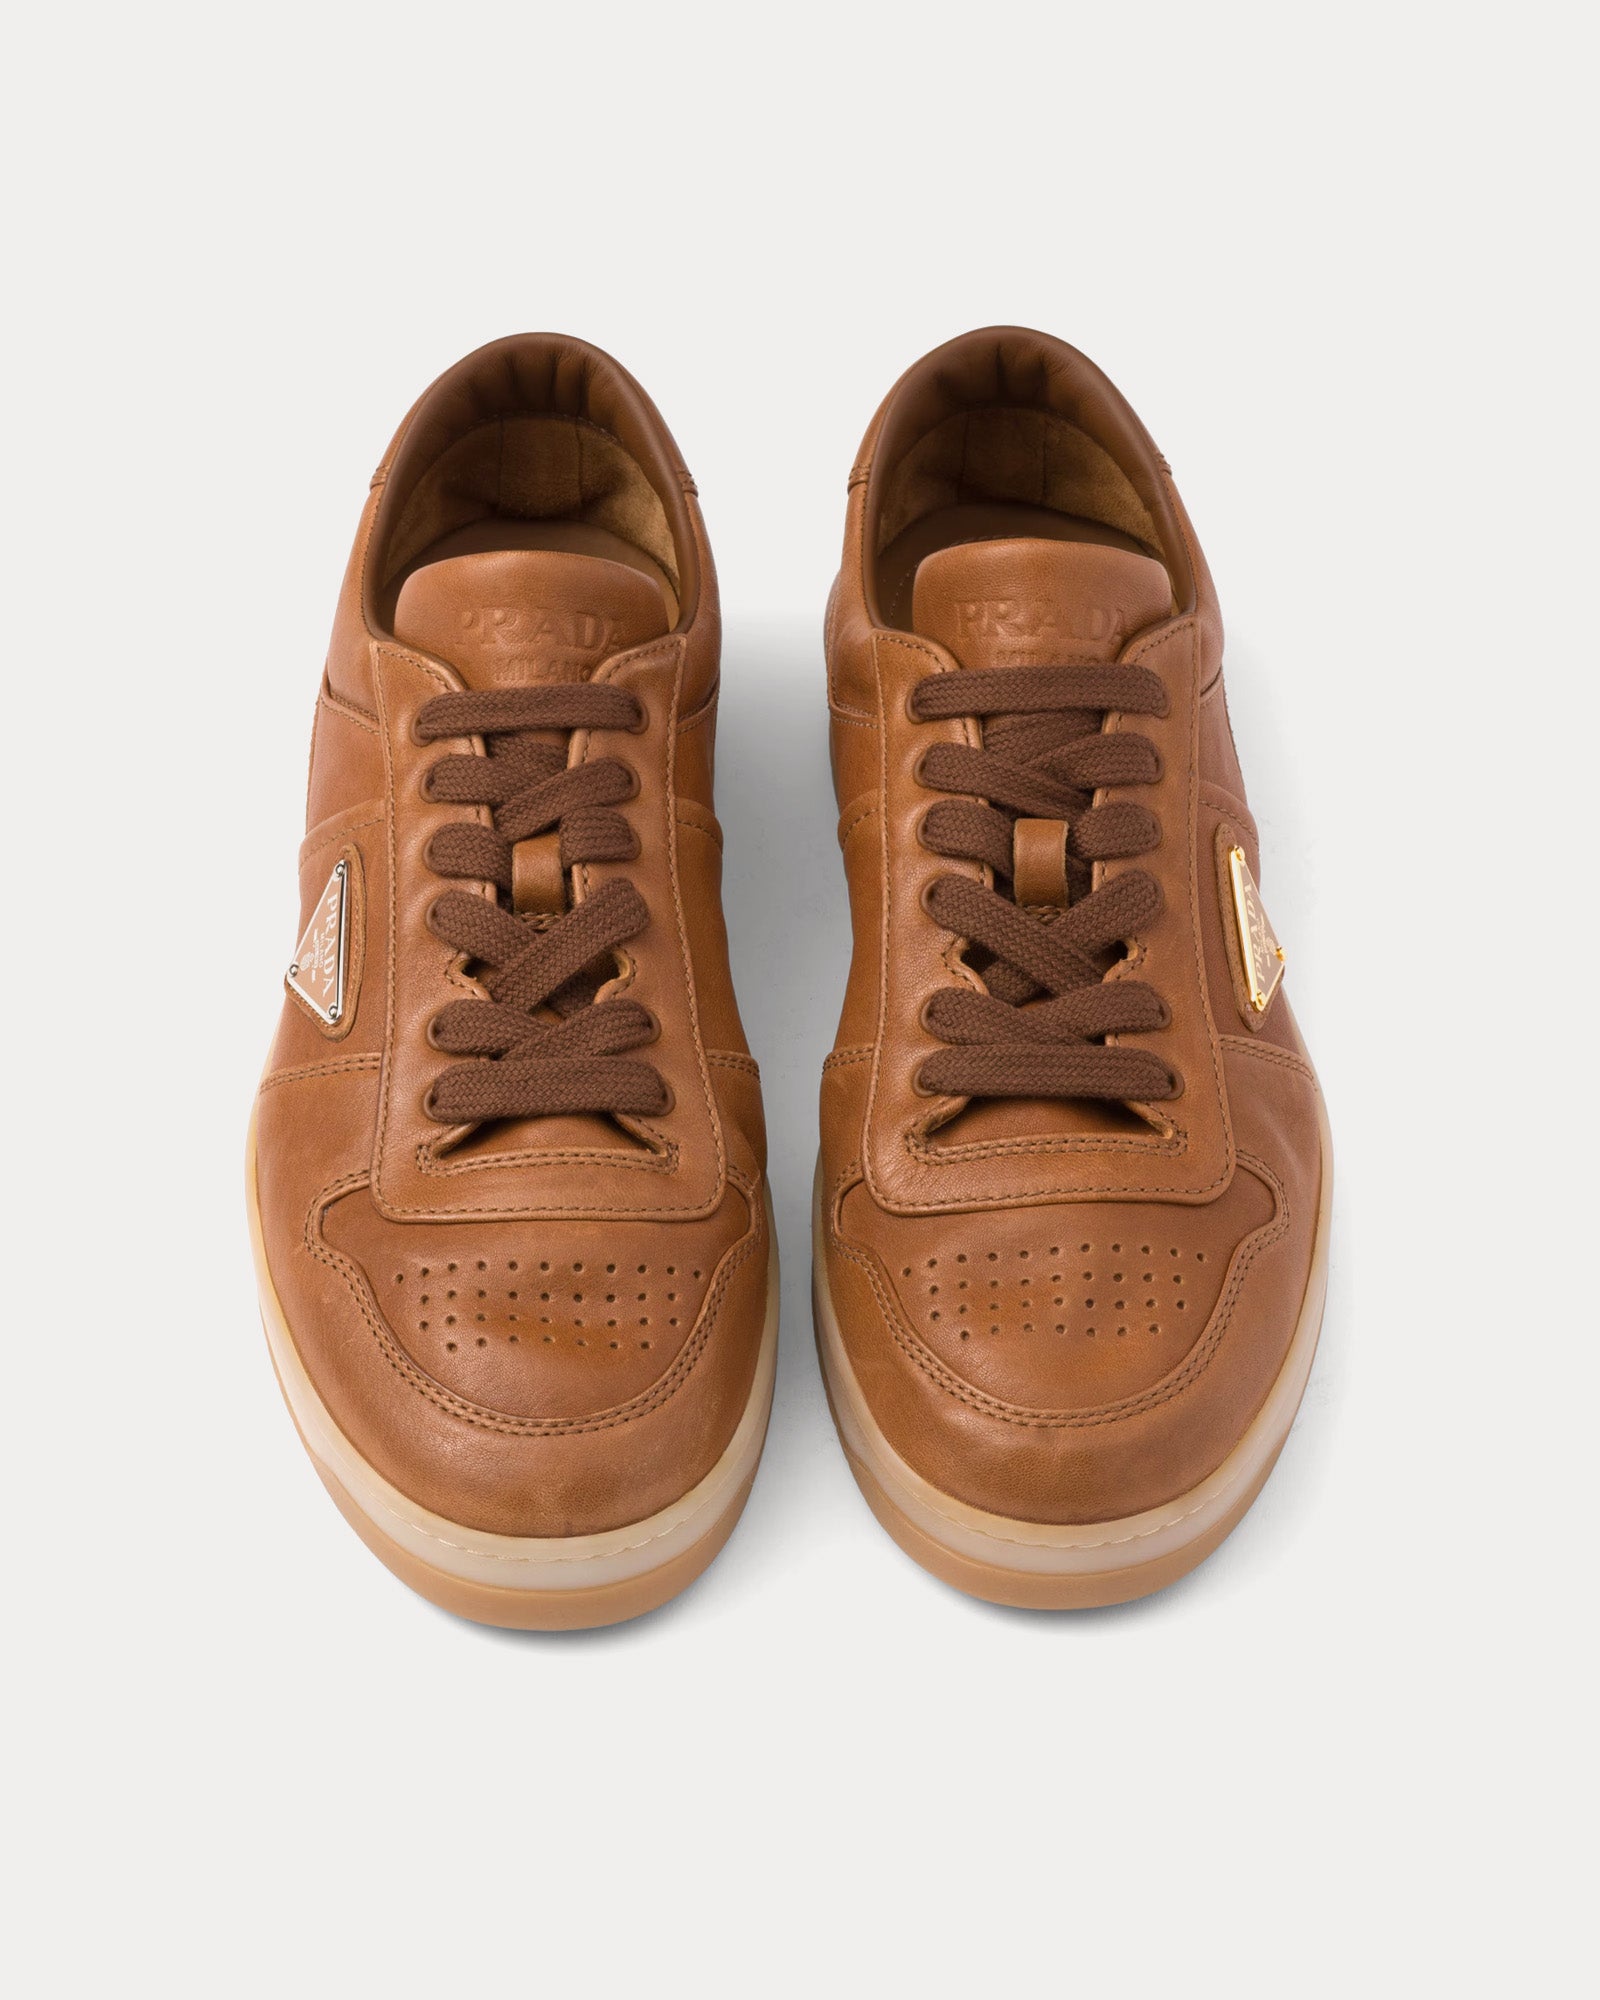 Prada - Downtown Nappa Leather Caramel Low Top Sneakers